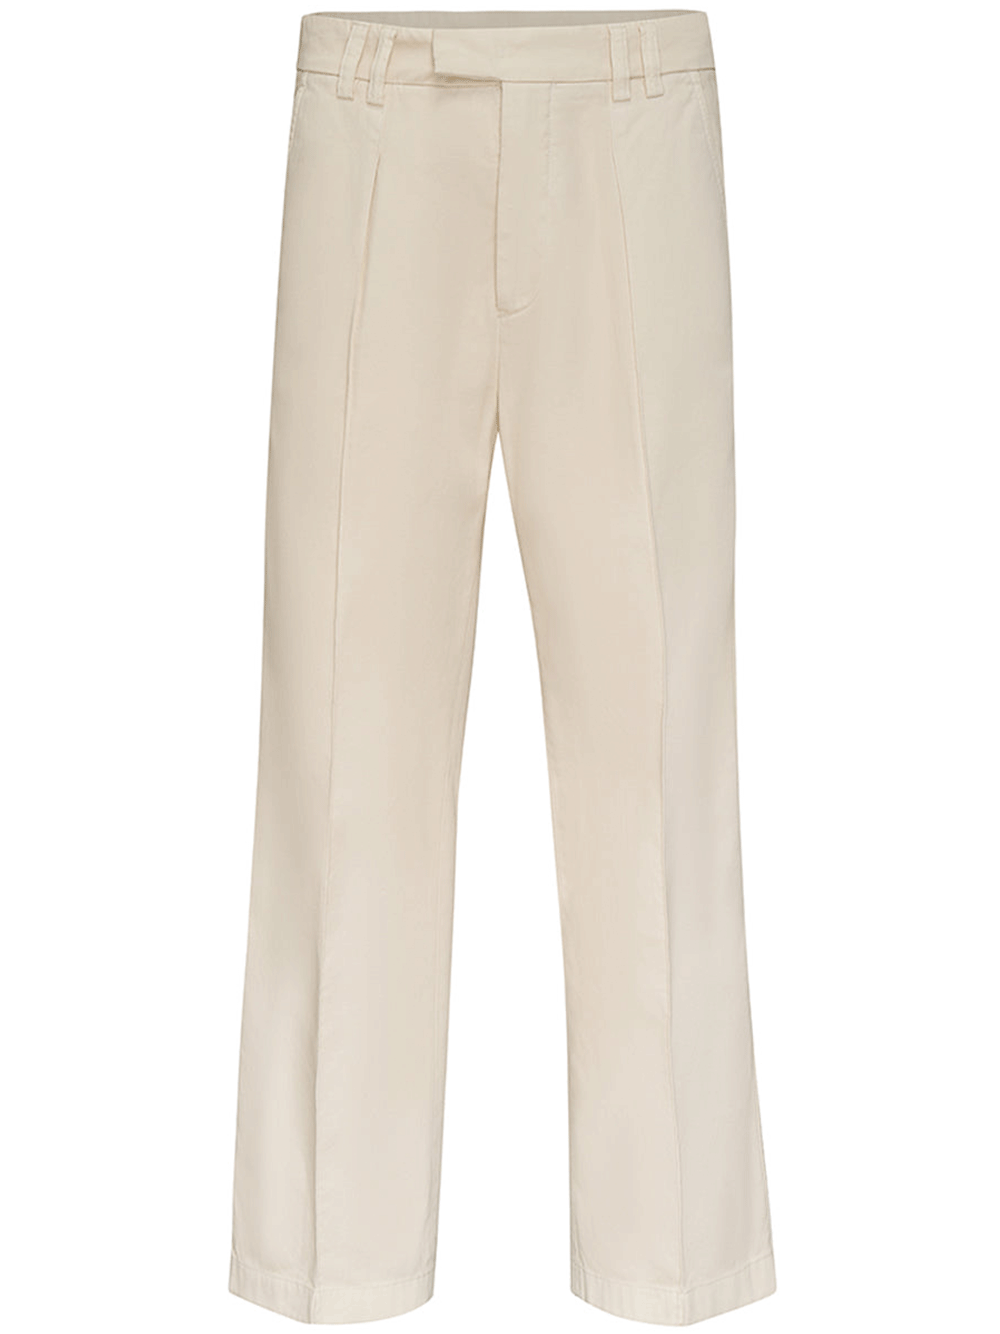 N21-Mid-Waist-Cotton-Pants-Beige-1